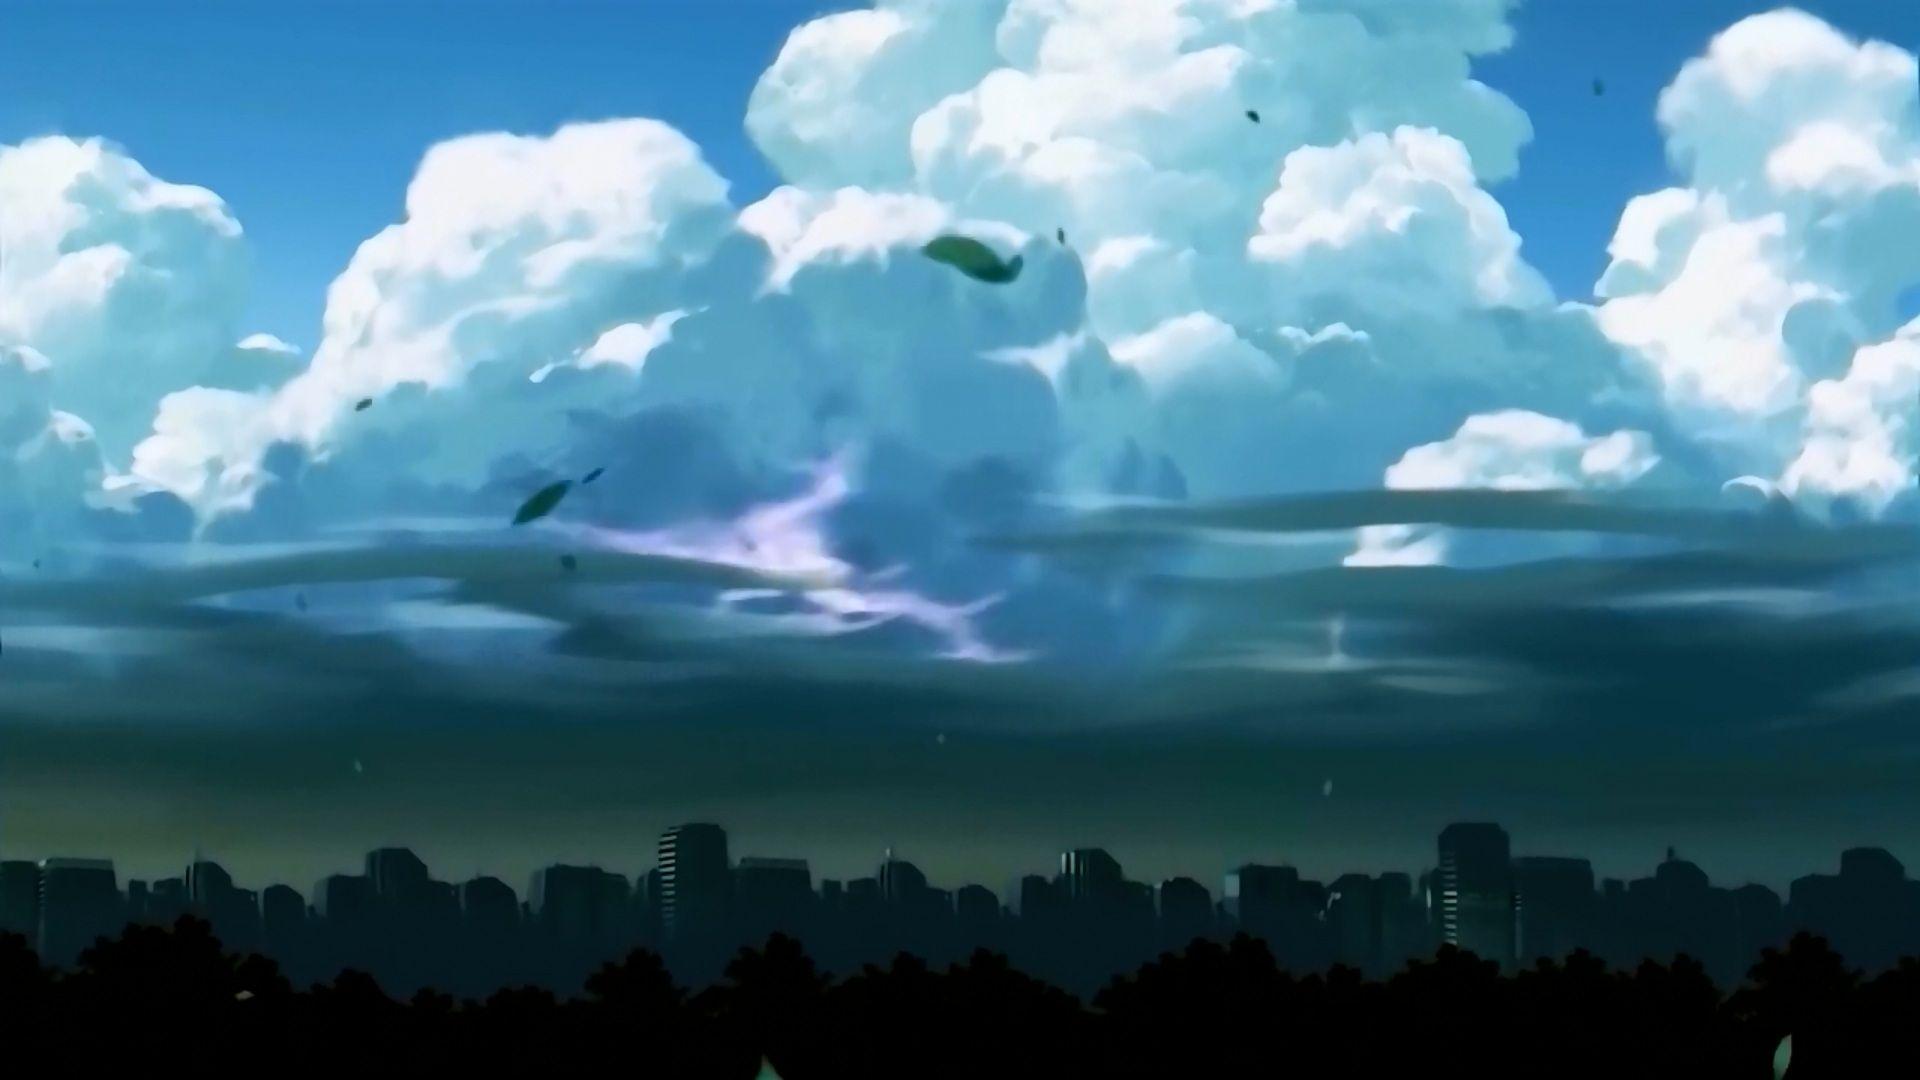 Anime Landscape Wallpapers - Top Free Anime Landscape ...